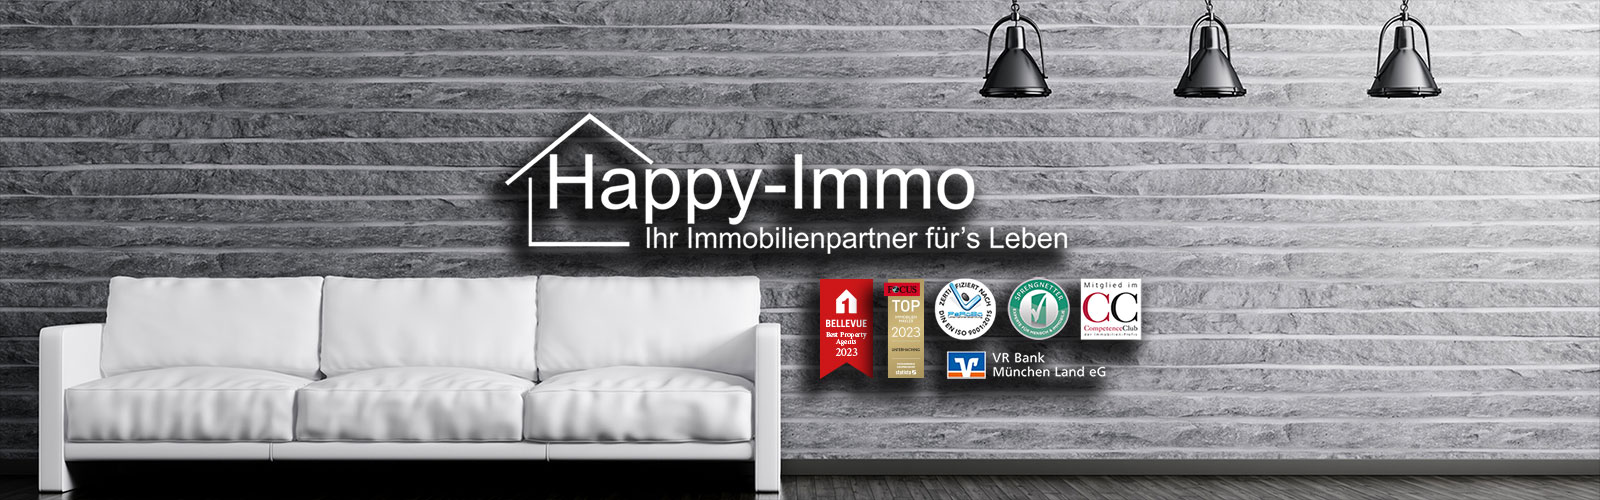 Happy Immo GmbH Immobilienmakler München-Obergiesing 089-6494870